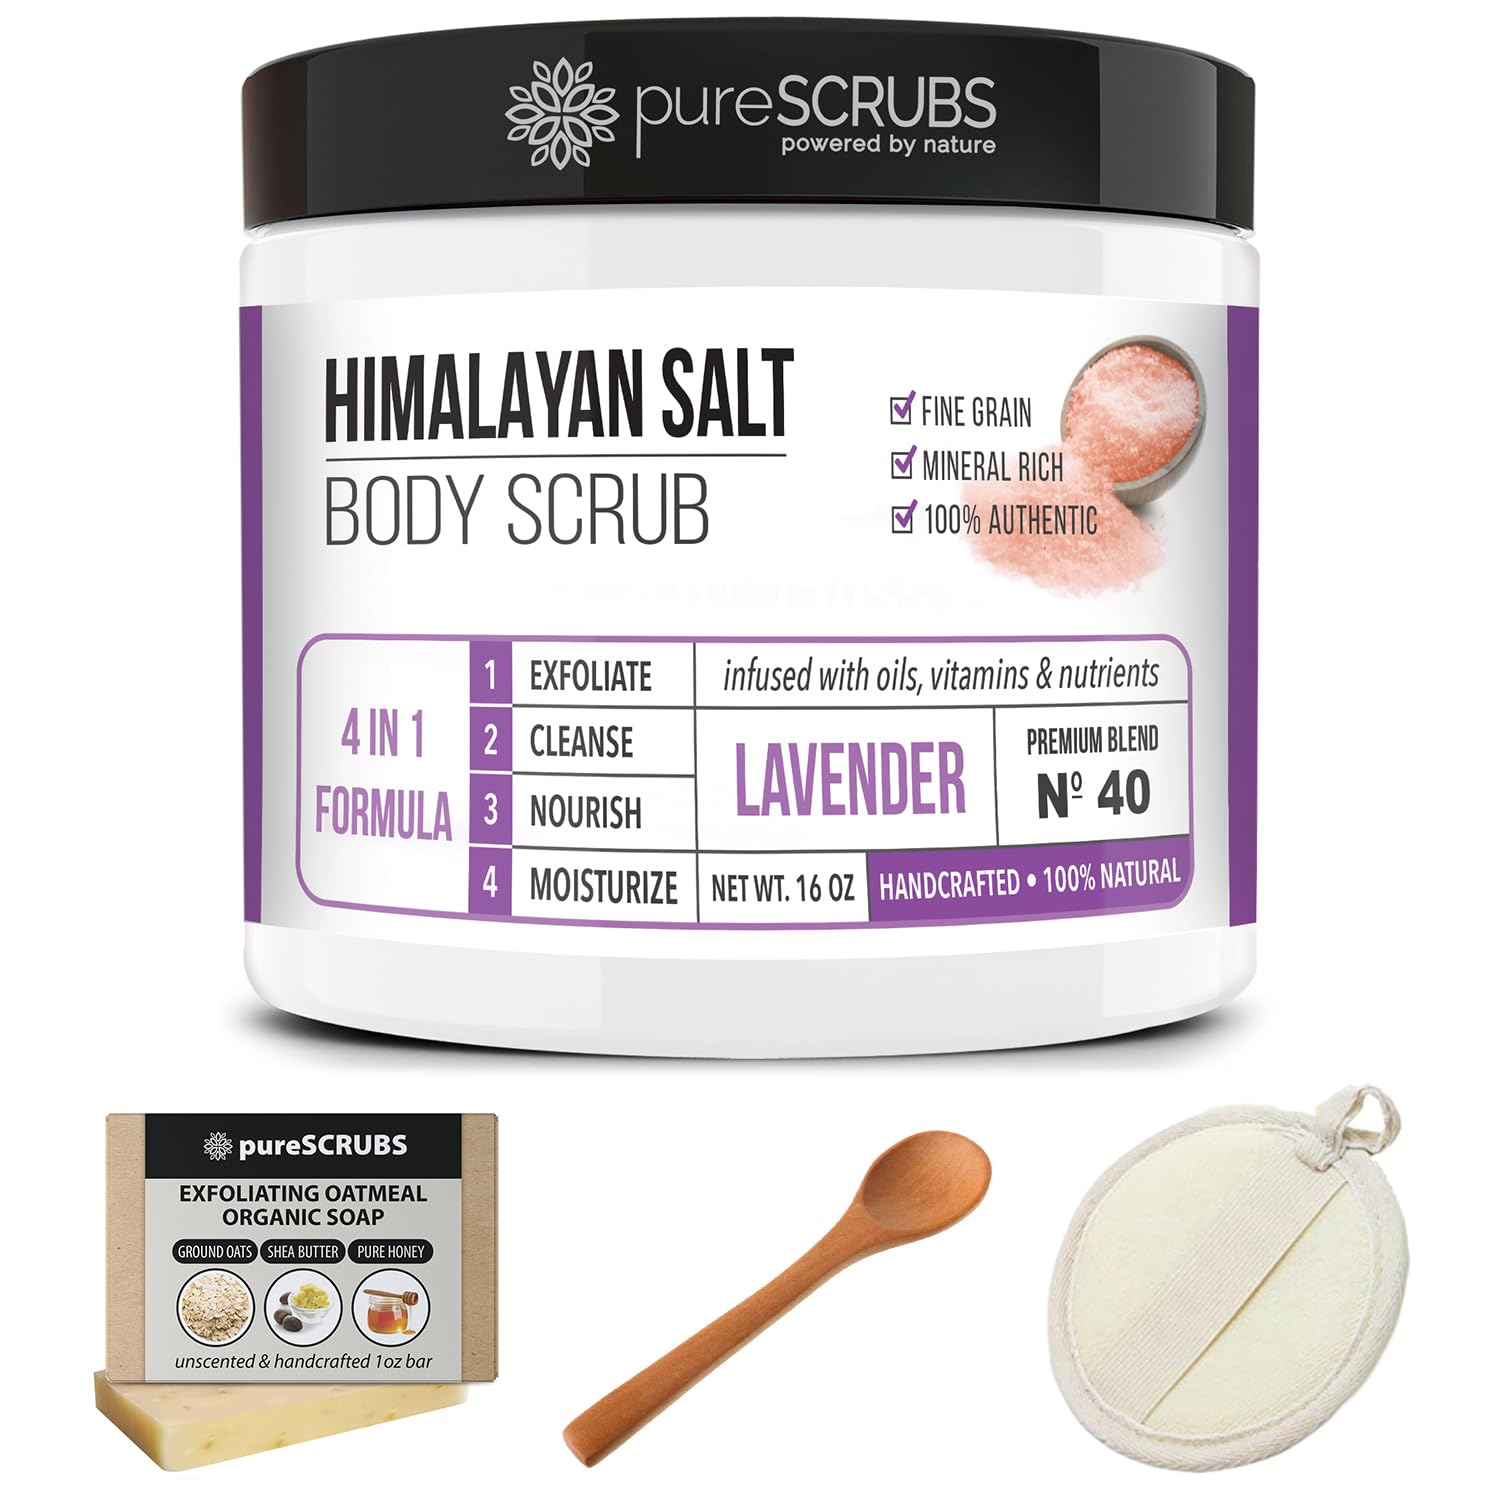 pureSCRUBS Premium Pink Himalayan Salt Body Scrub Set - Large 16oz LAVENDER SCRUB, Organic Essential Oils & Nutrients INCLUDES Wooden Stirring Spoon, Loofah & Mini Exfoliating Bar Soap